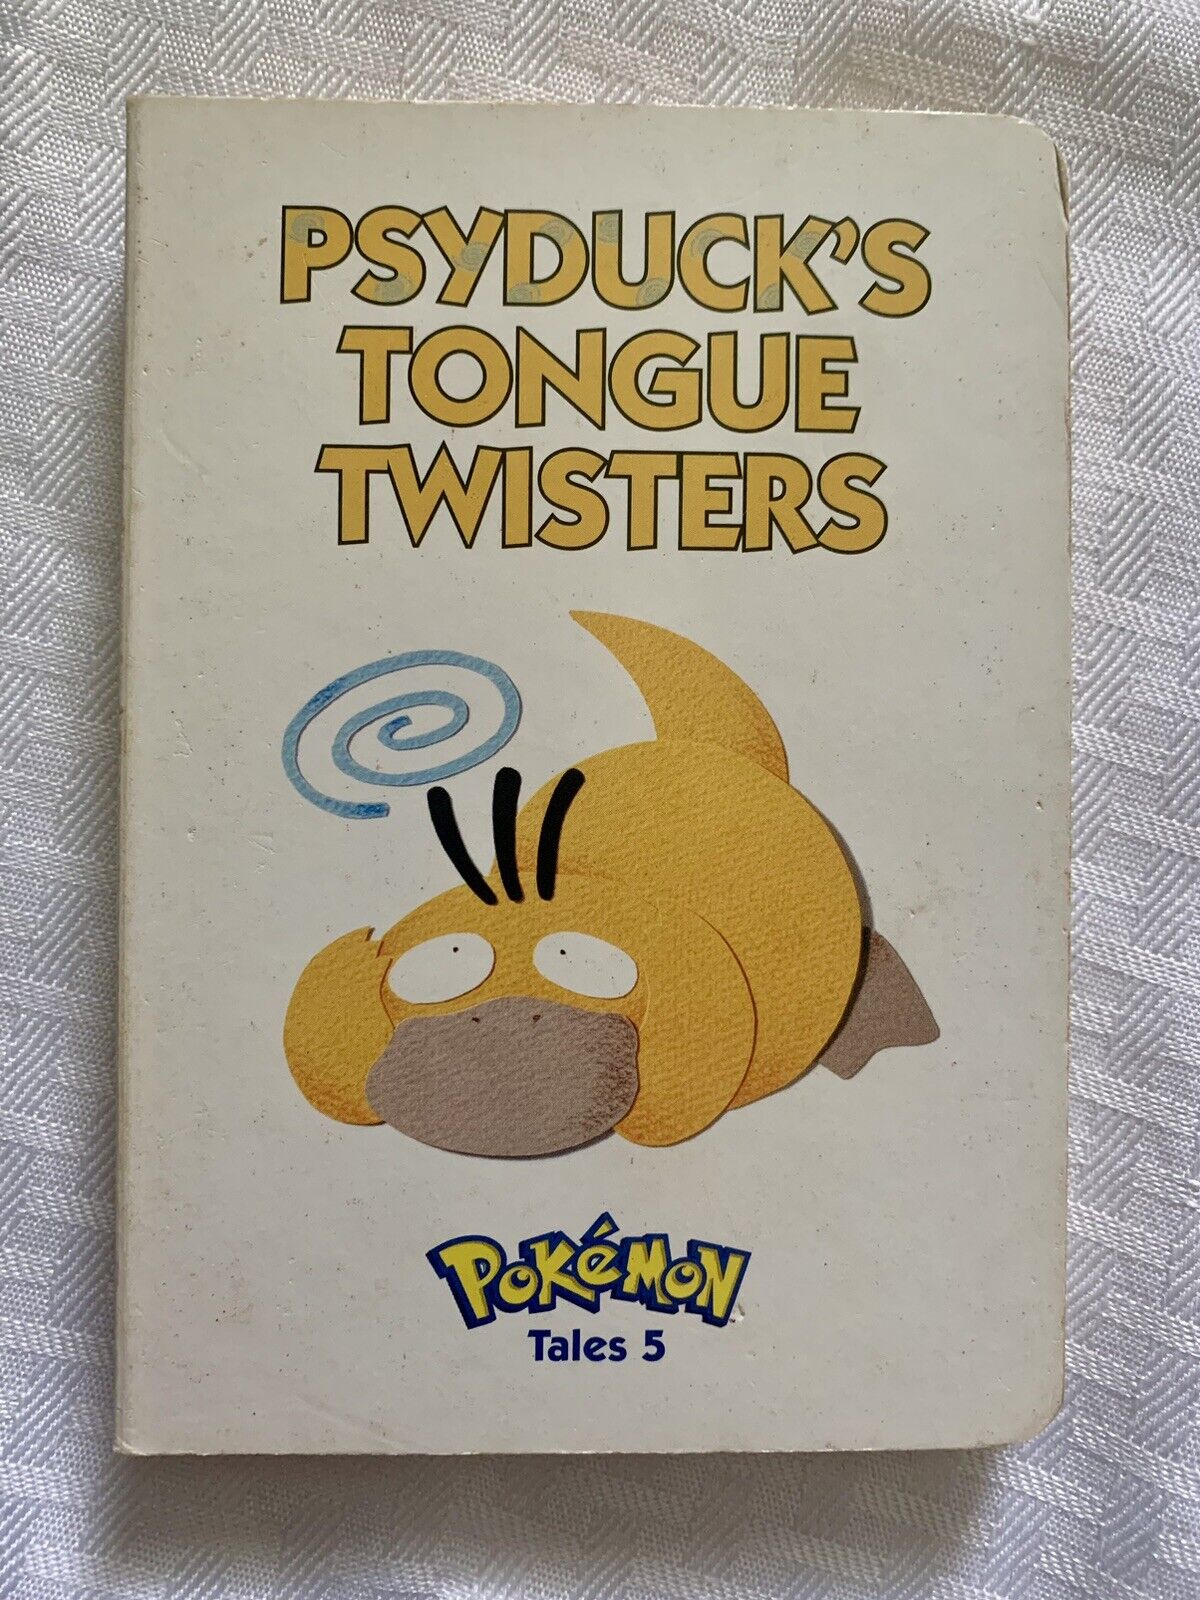 Vintage 1999 Nintendo Pokemon Tales 5 PSYDUCK’S TONGUE TWISTERS